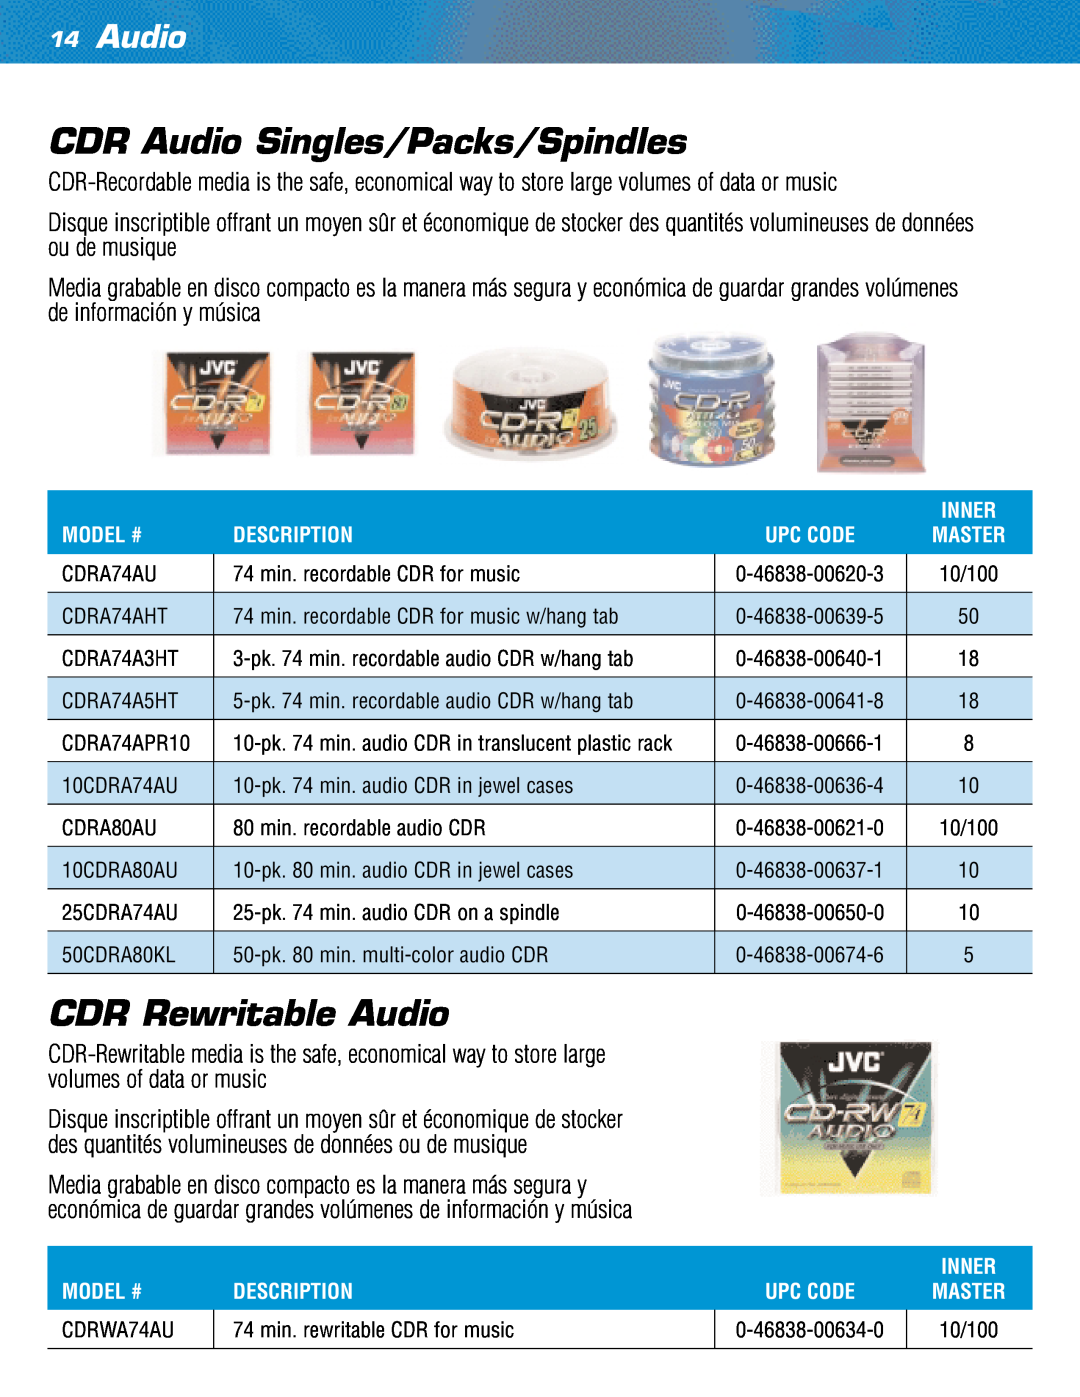 JVC TC35KL3P manual CDR Audio Singles/Packs/Spindles, CDR Rewritable Audio 